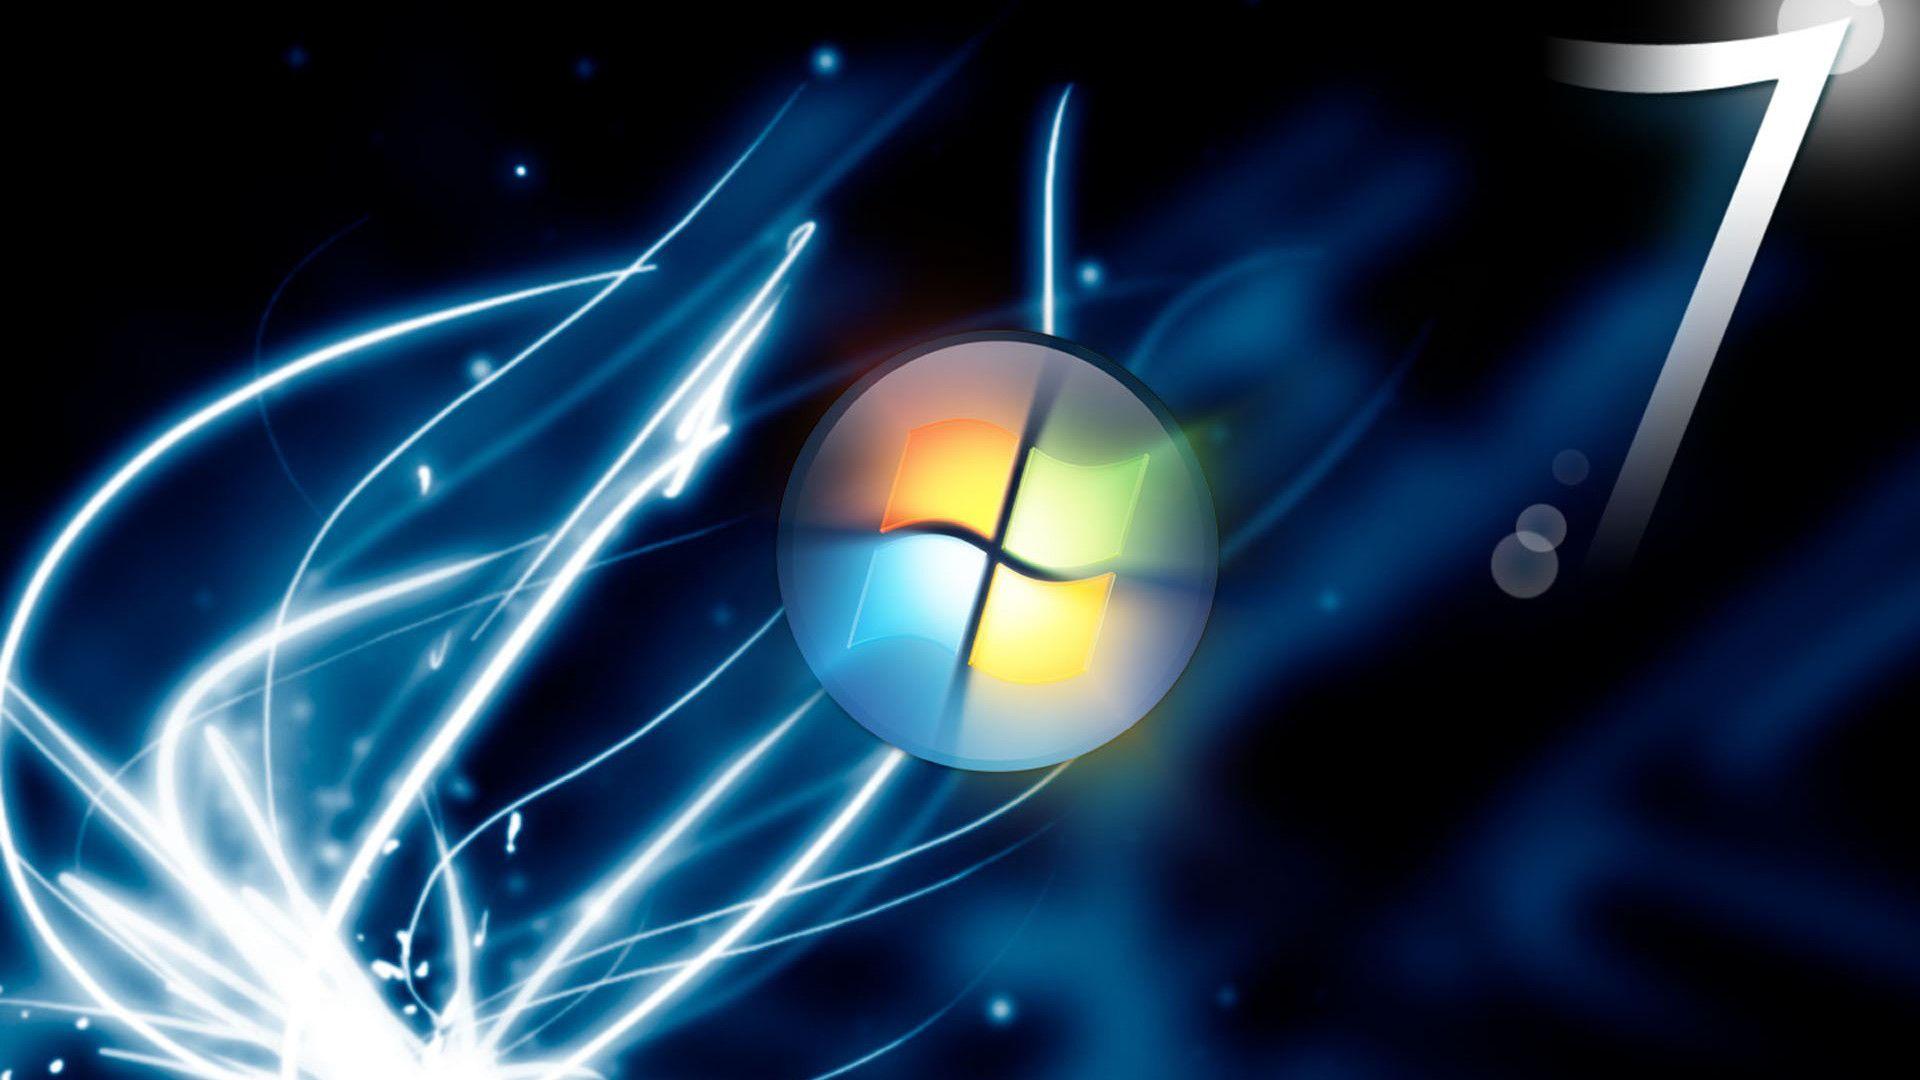 Windows 7 HD Wallpapers - Top Free Windows 7 HD Backgrounds ...